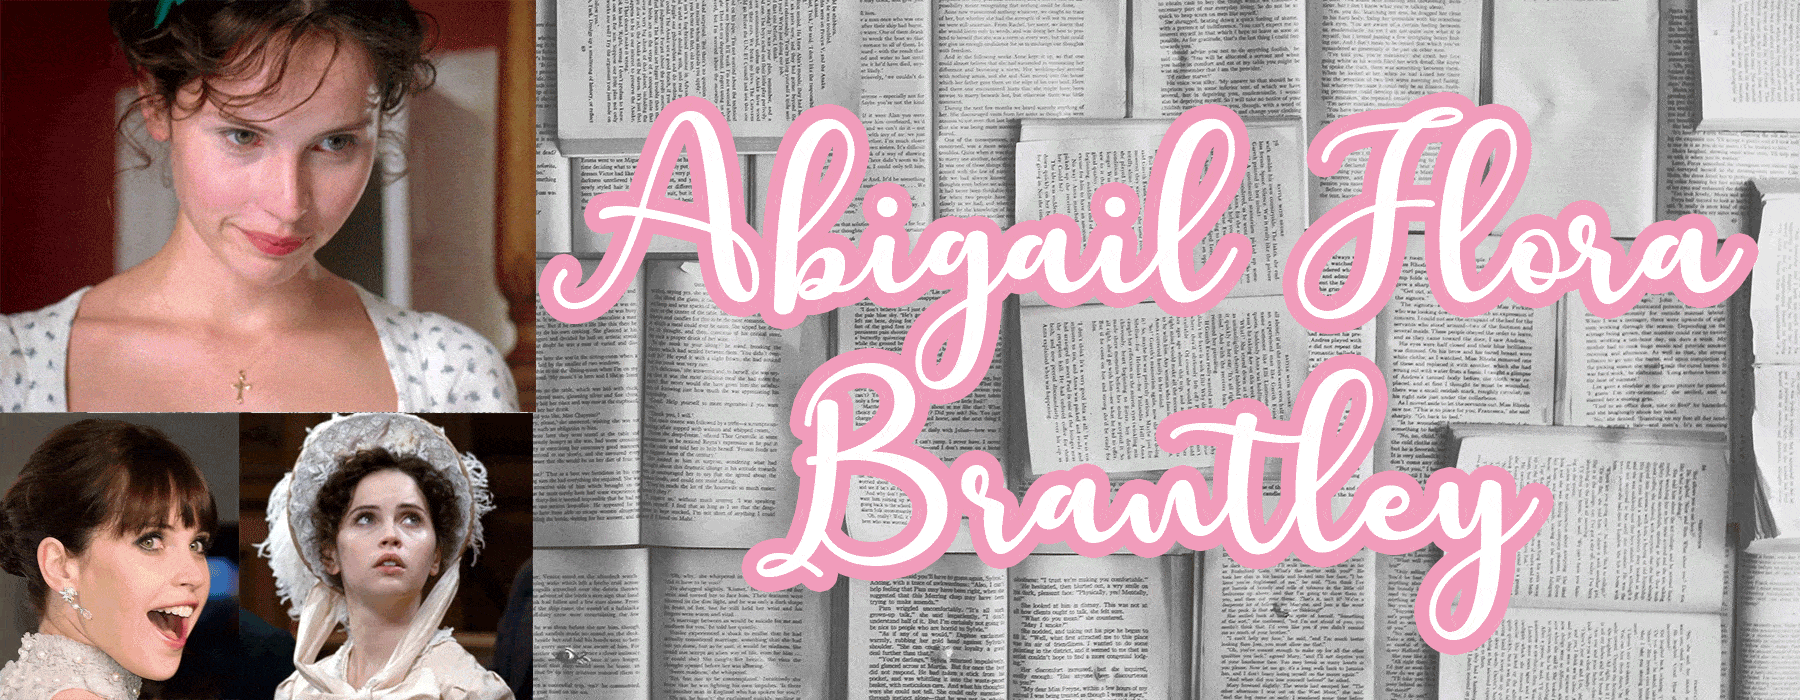 AbigailBrantley